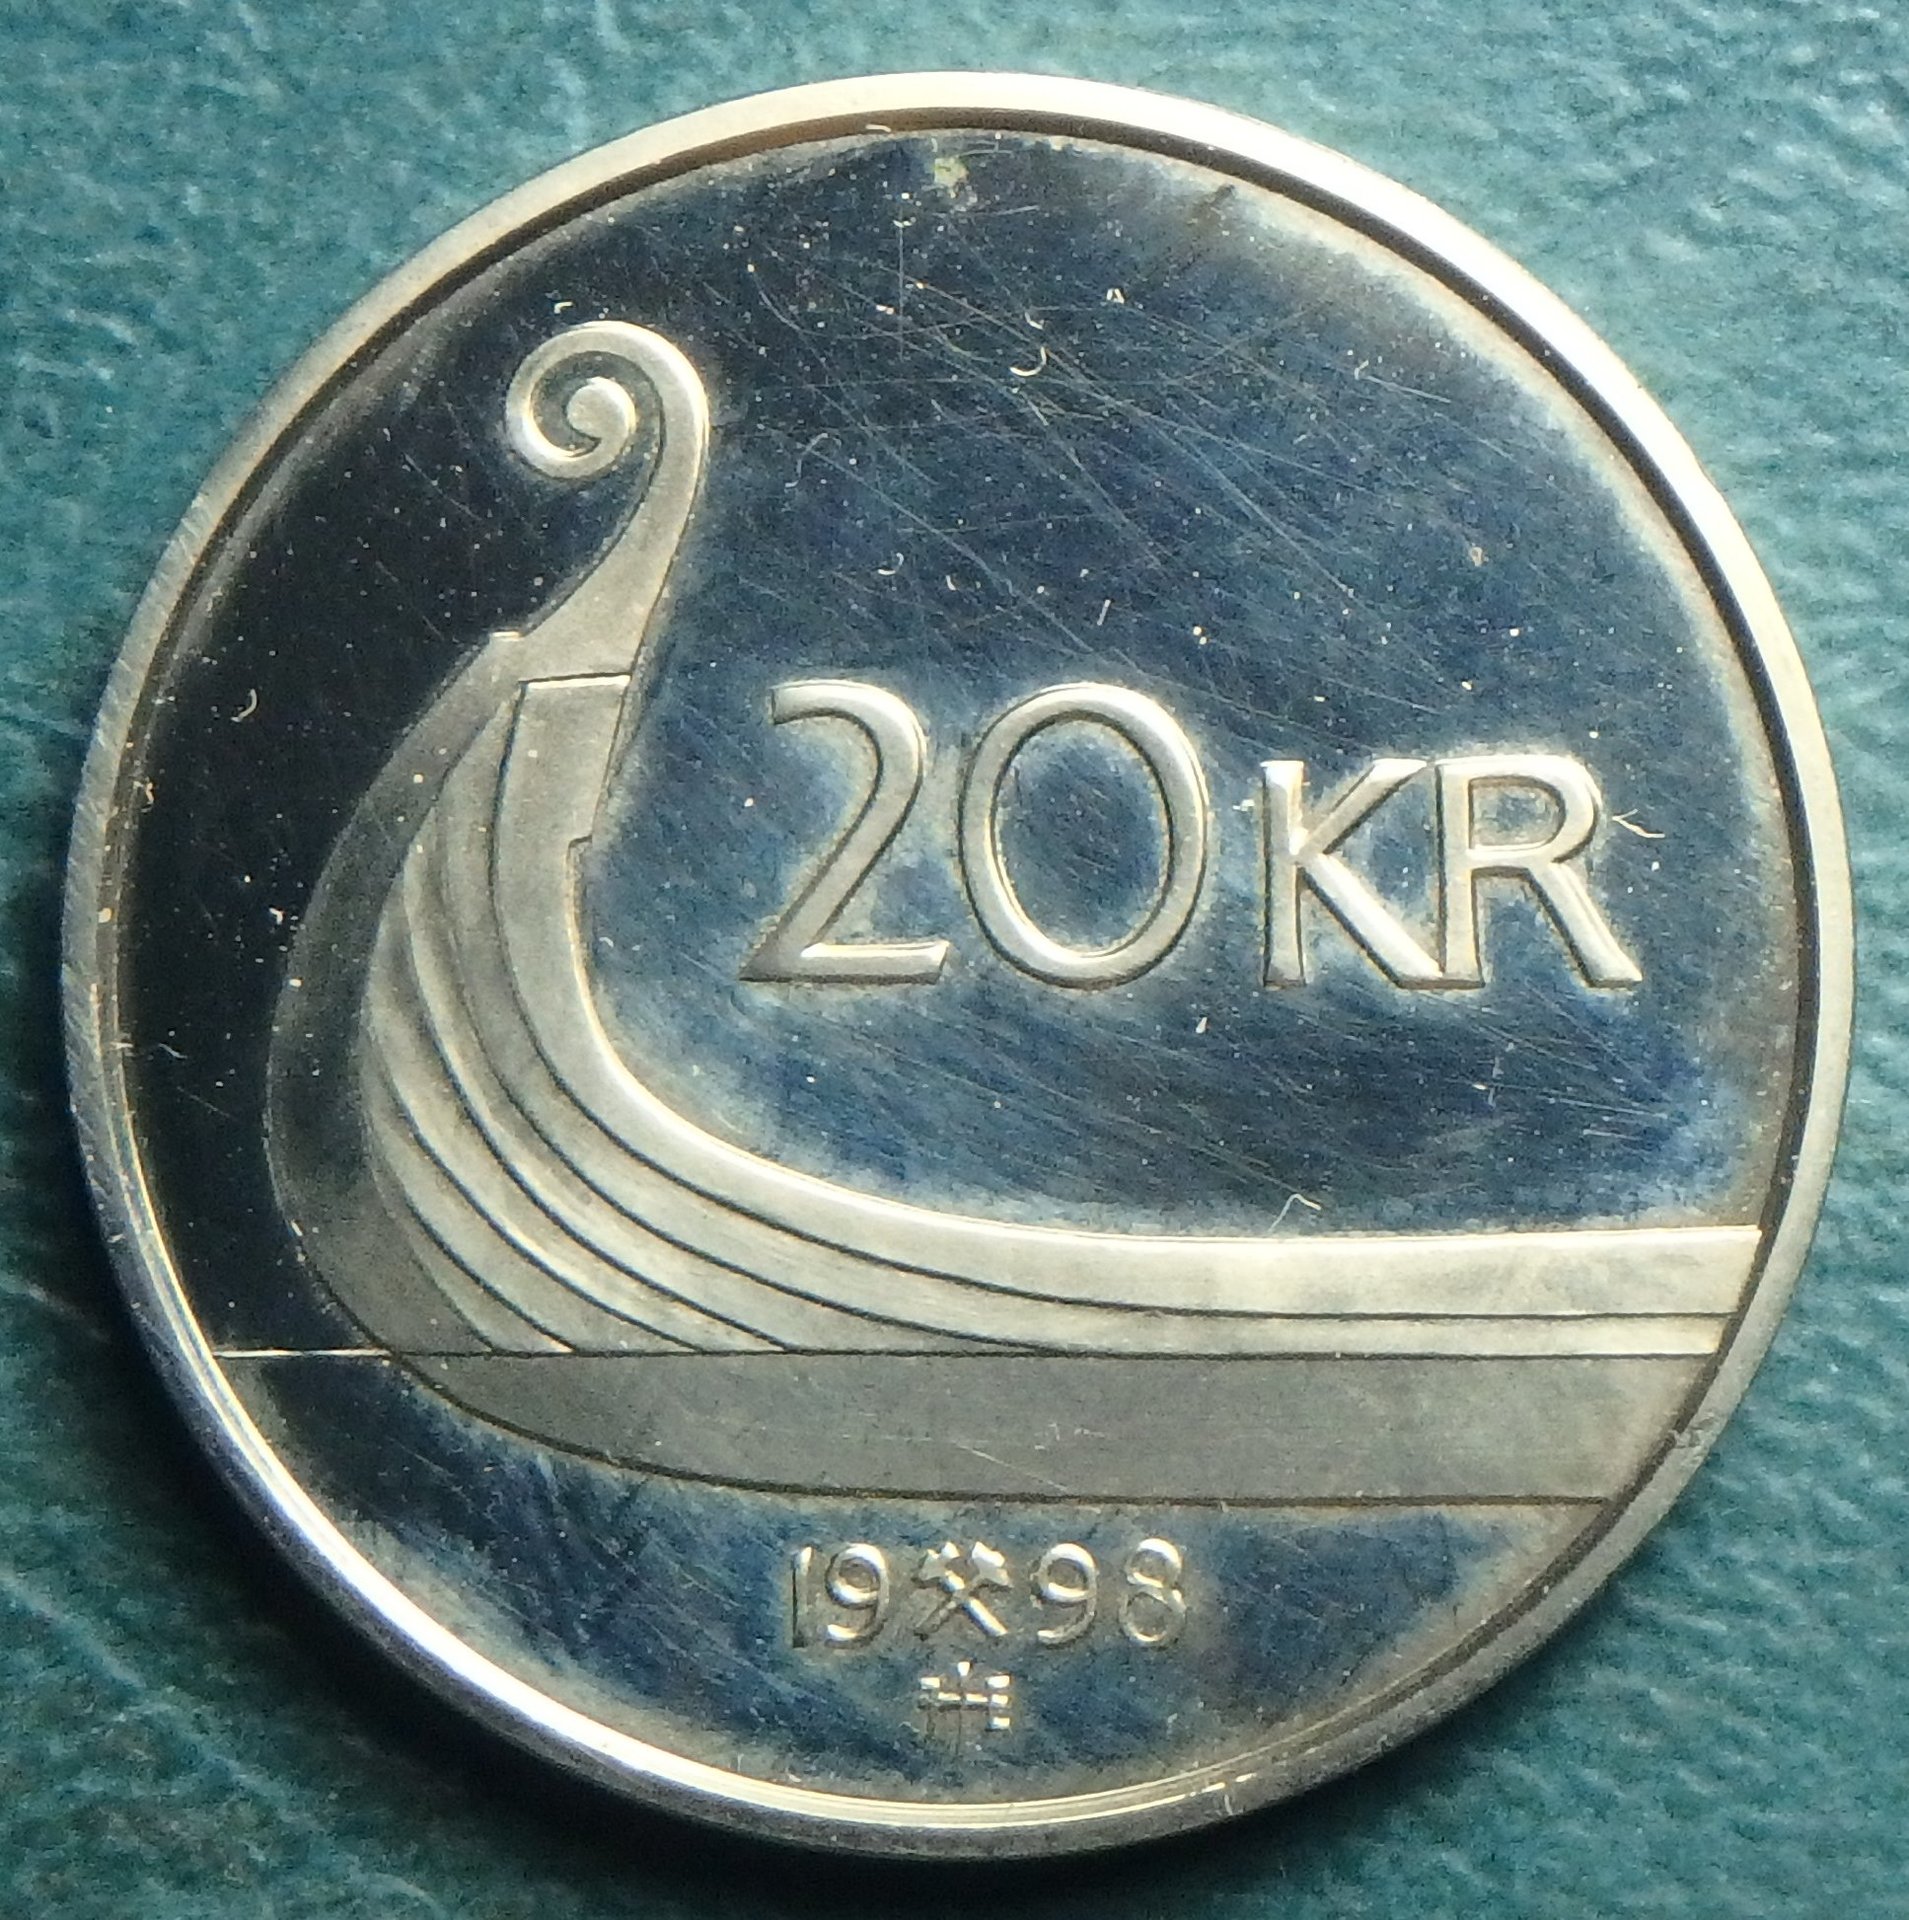 1998 NO 20 k rev.JPG